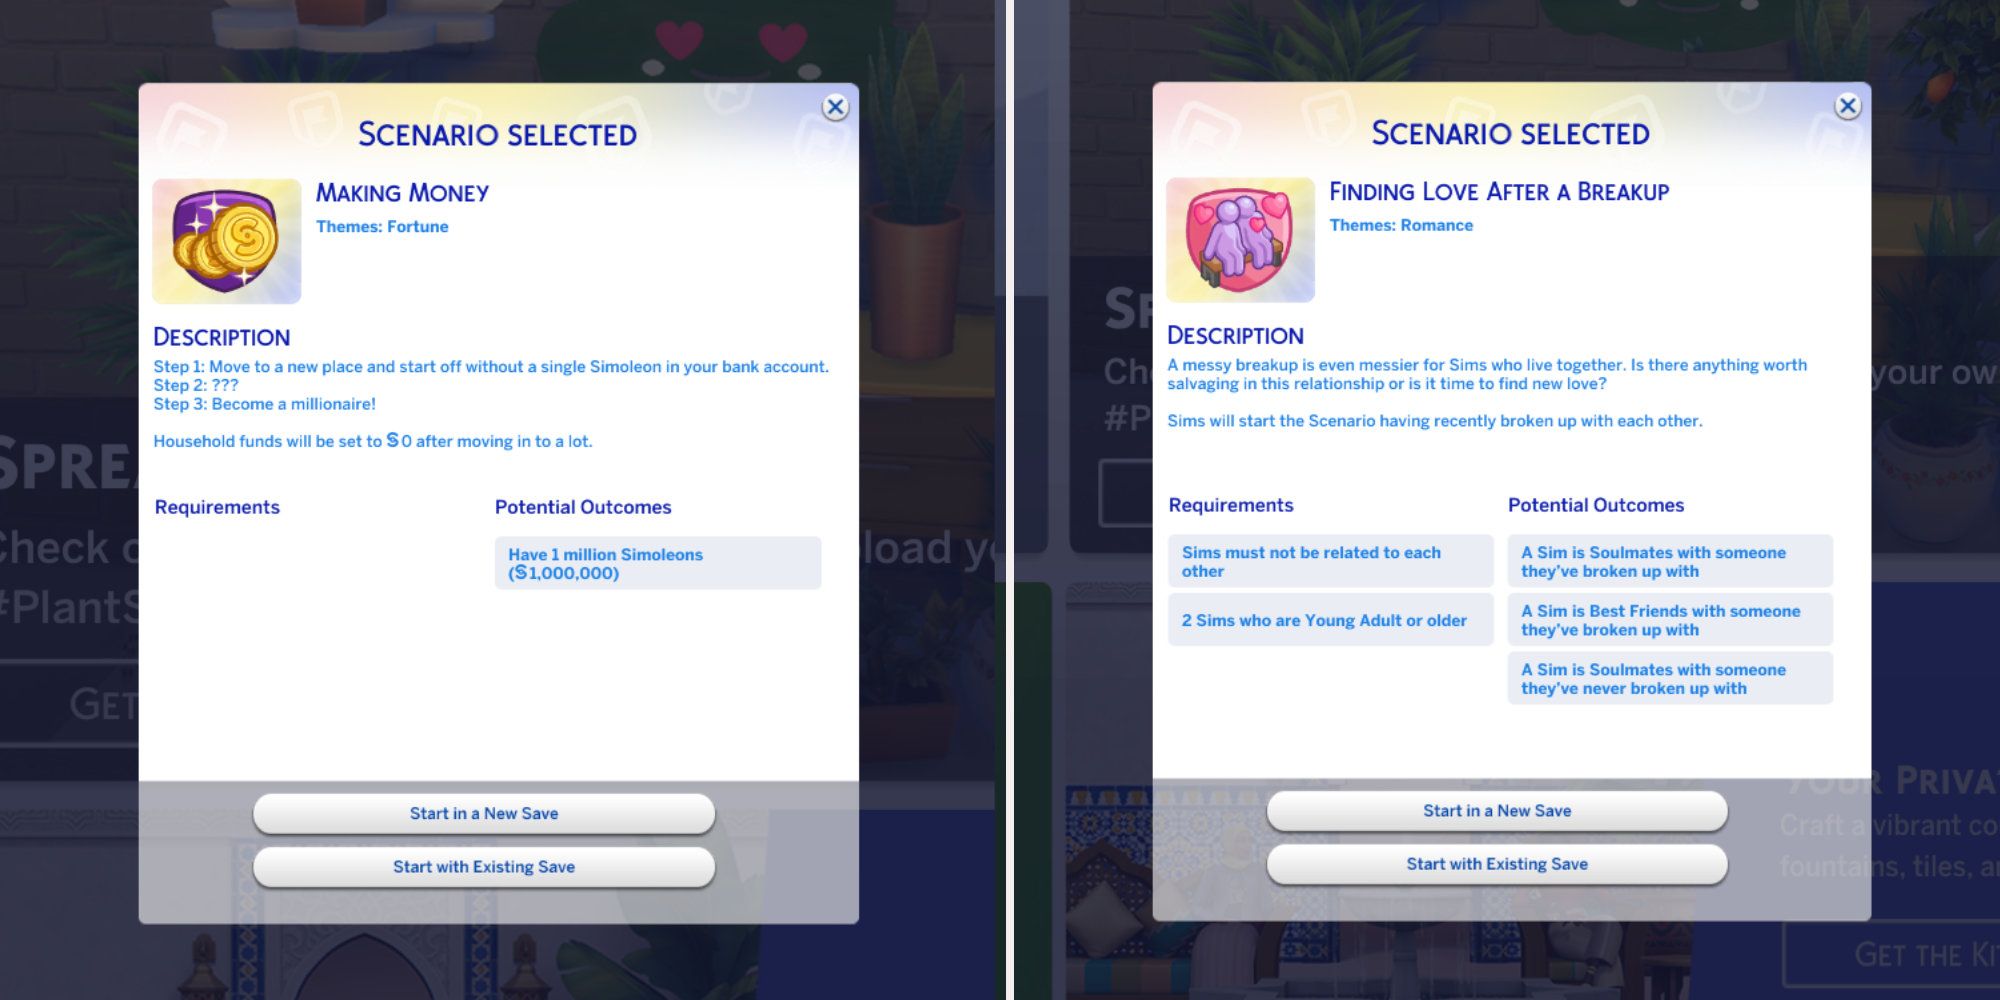 Sims 4 two permanent scenarios